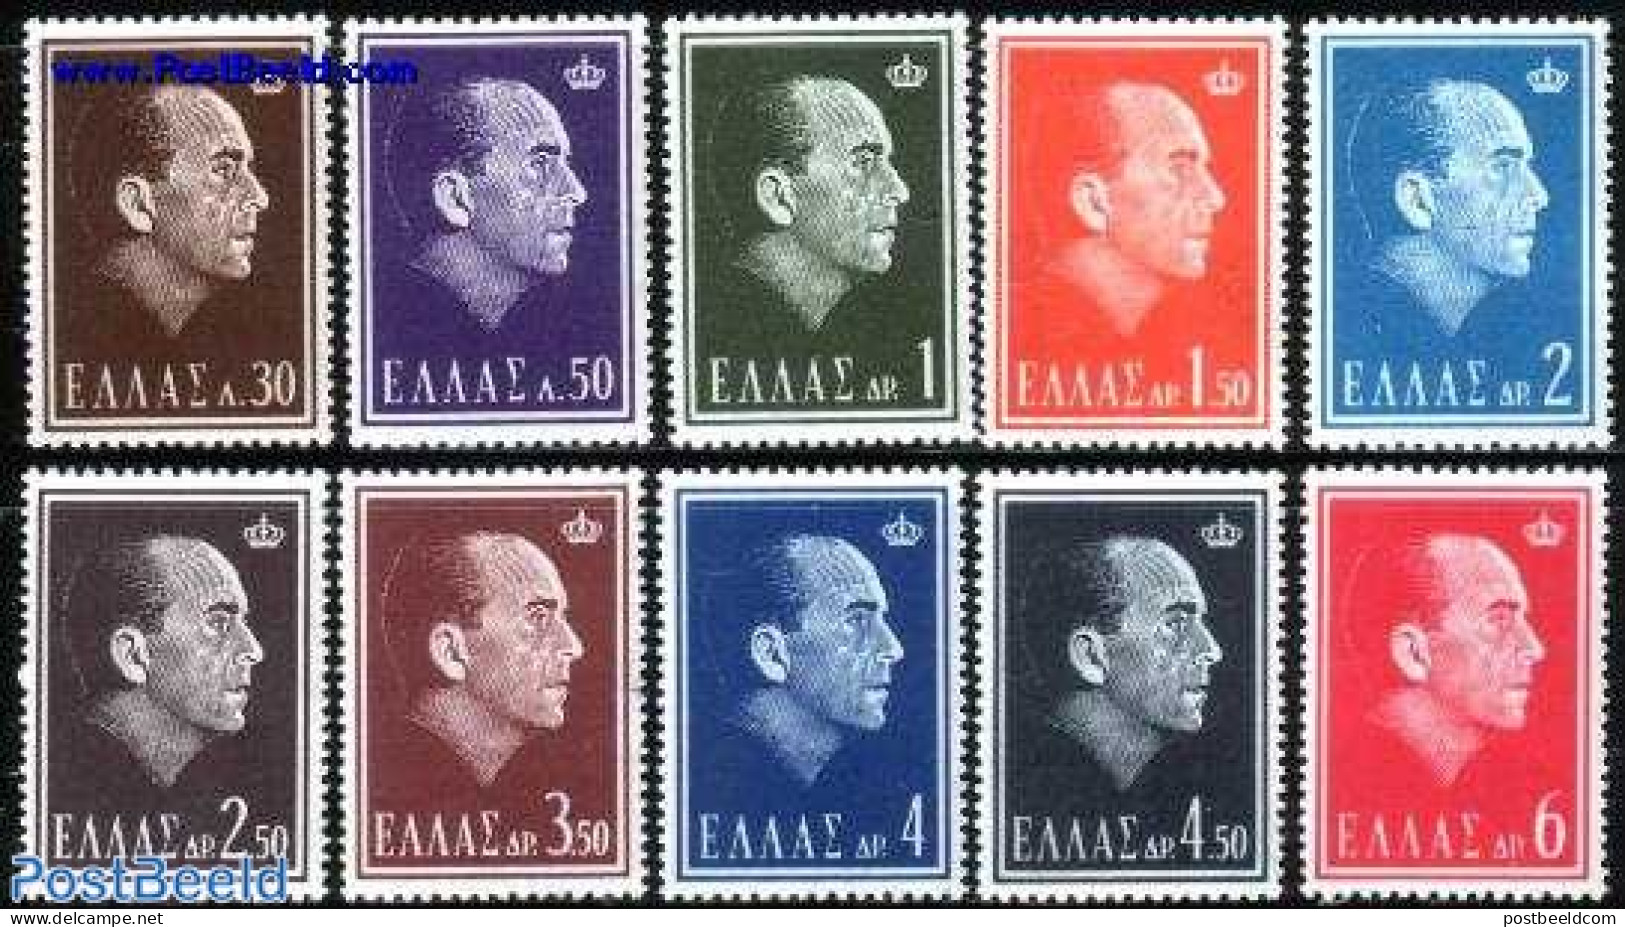 Greece 1964 Definitives, King Paul I 10v, Mint NH - Neufs